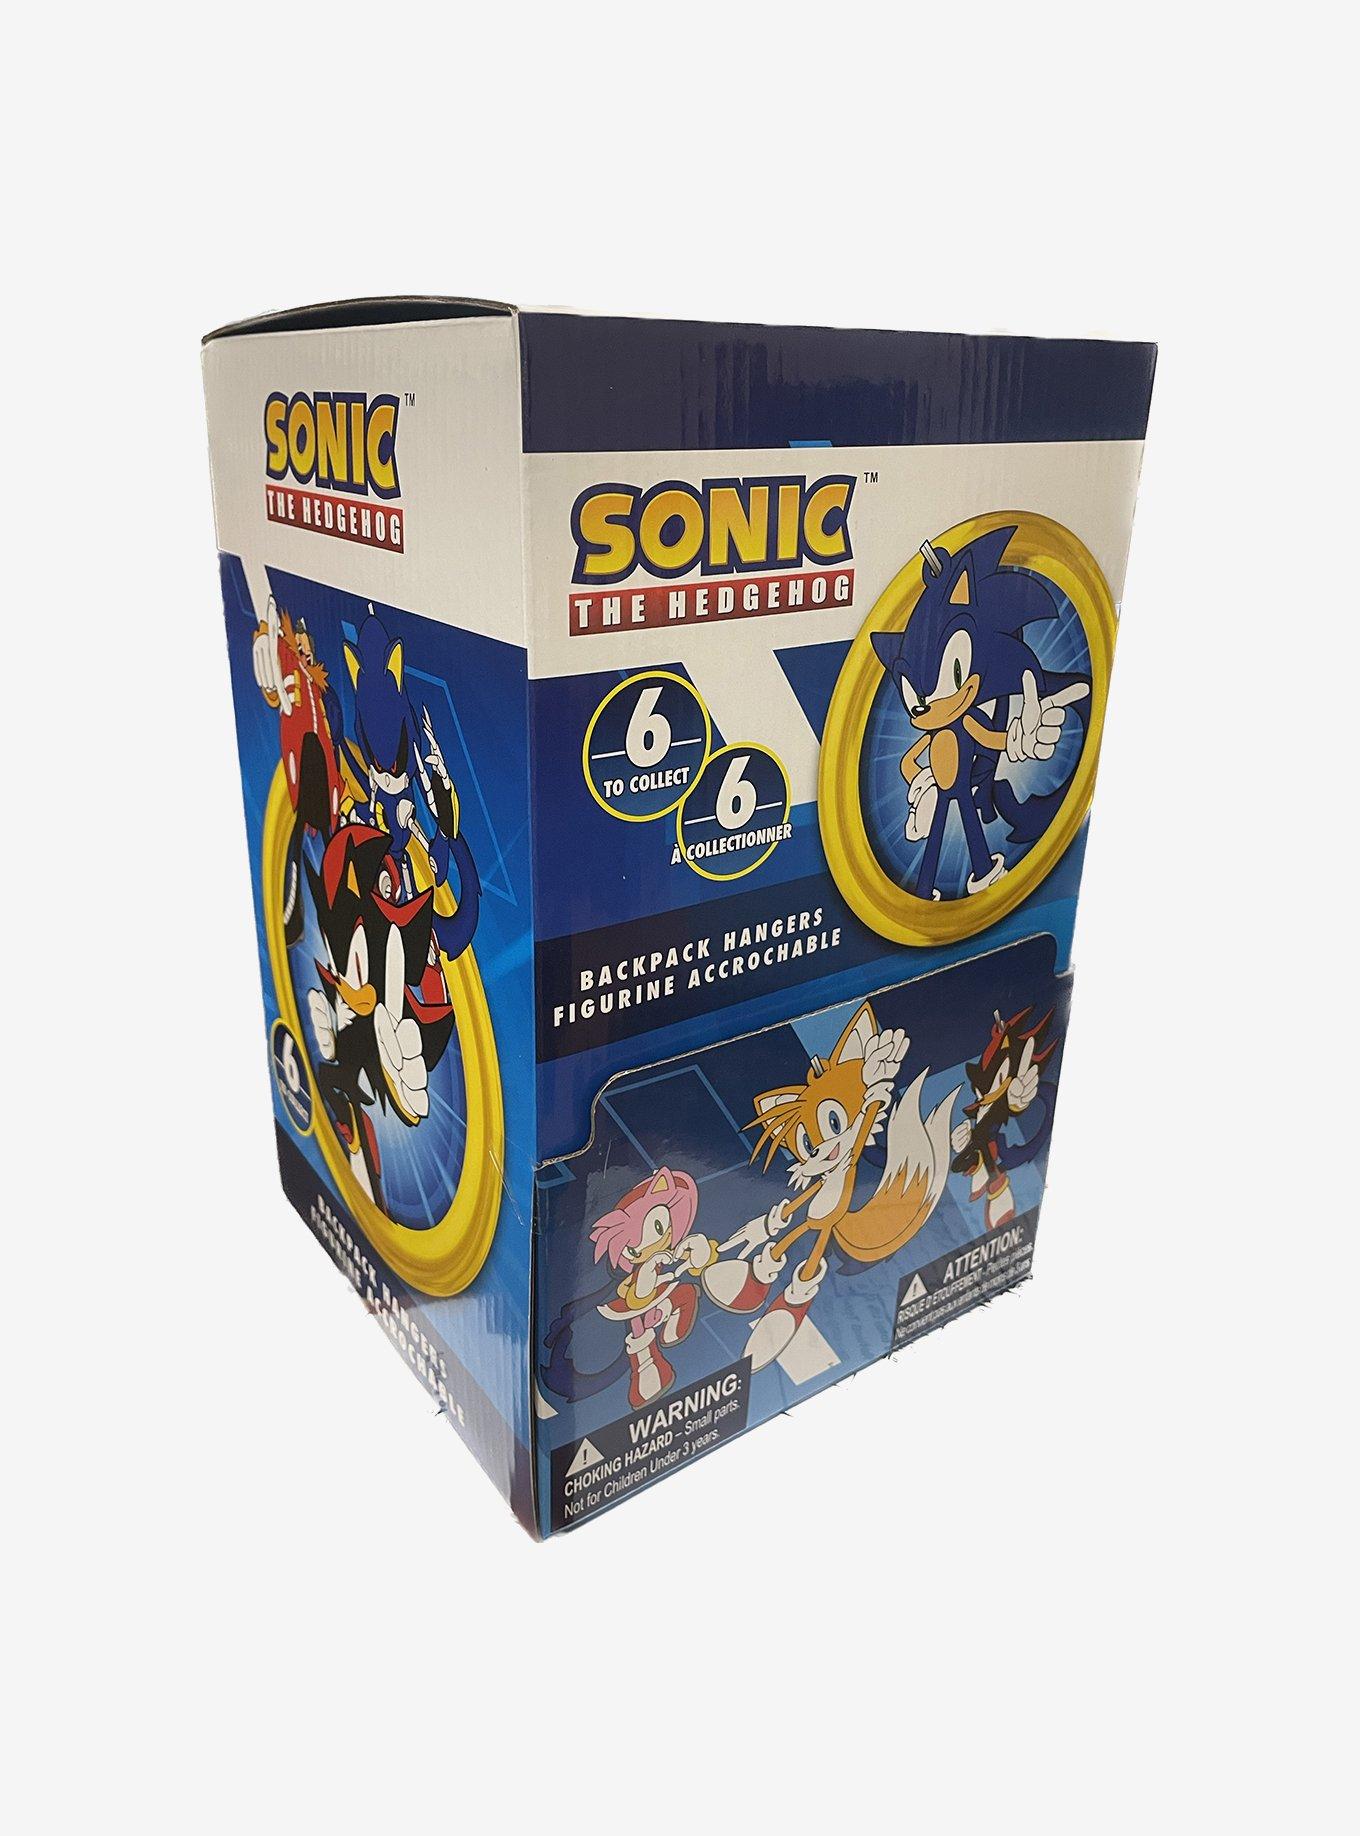 Sonic The Hedgehog Character Blind Bag Figural Key Chain